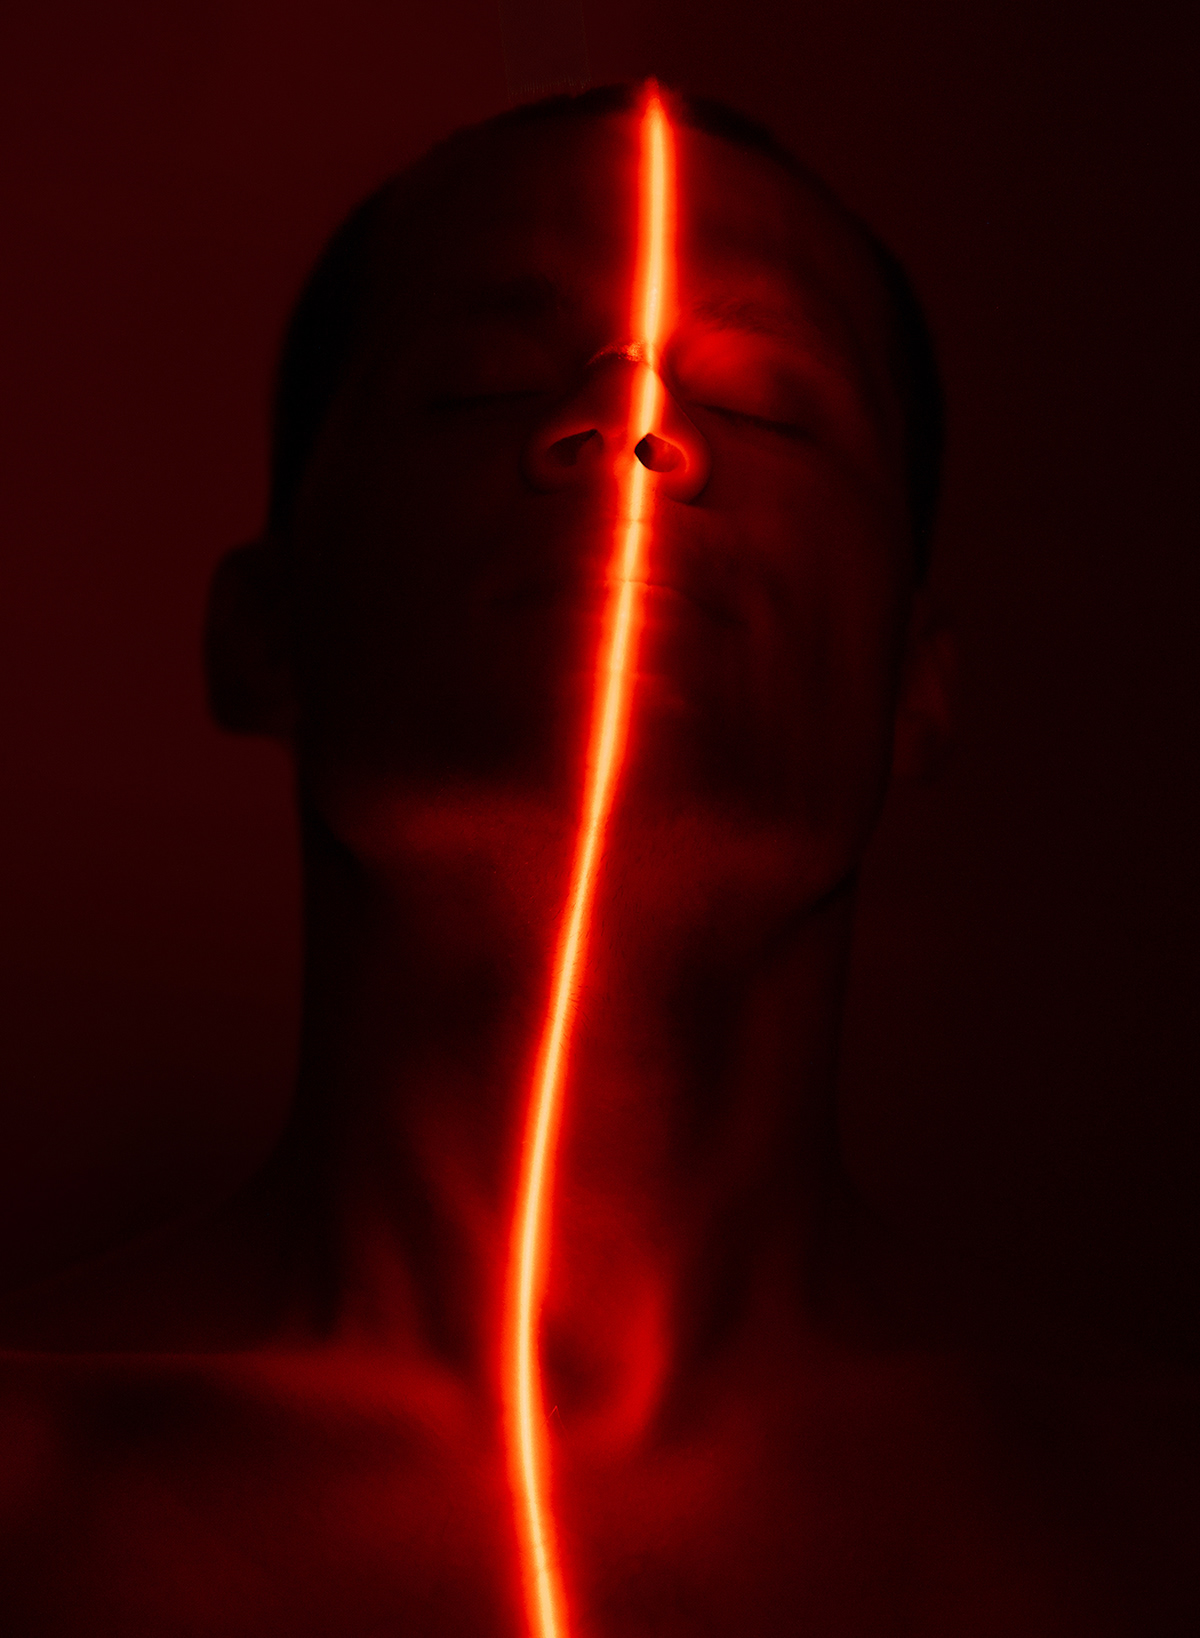 laser darkness red night men light shadow burn acid psychedelic